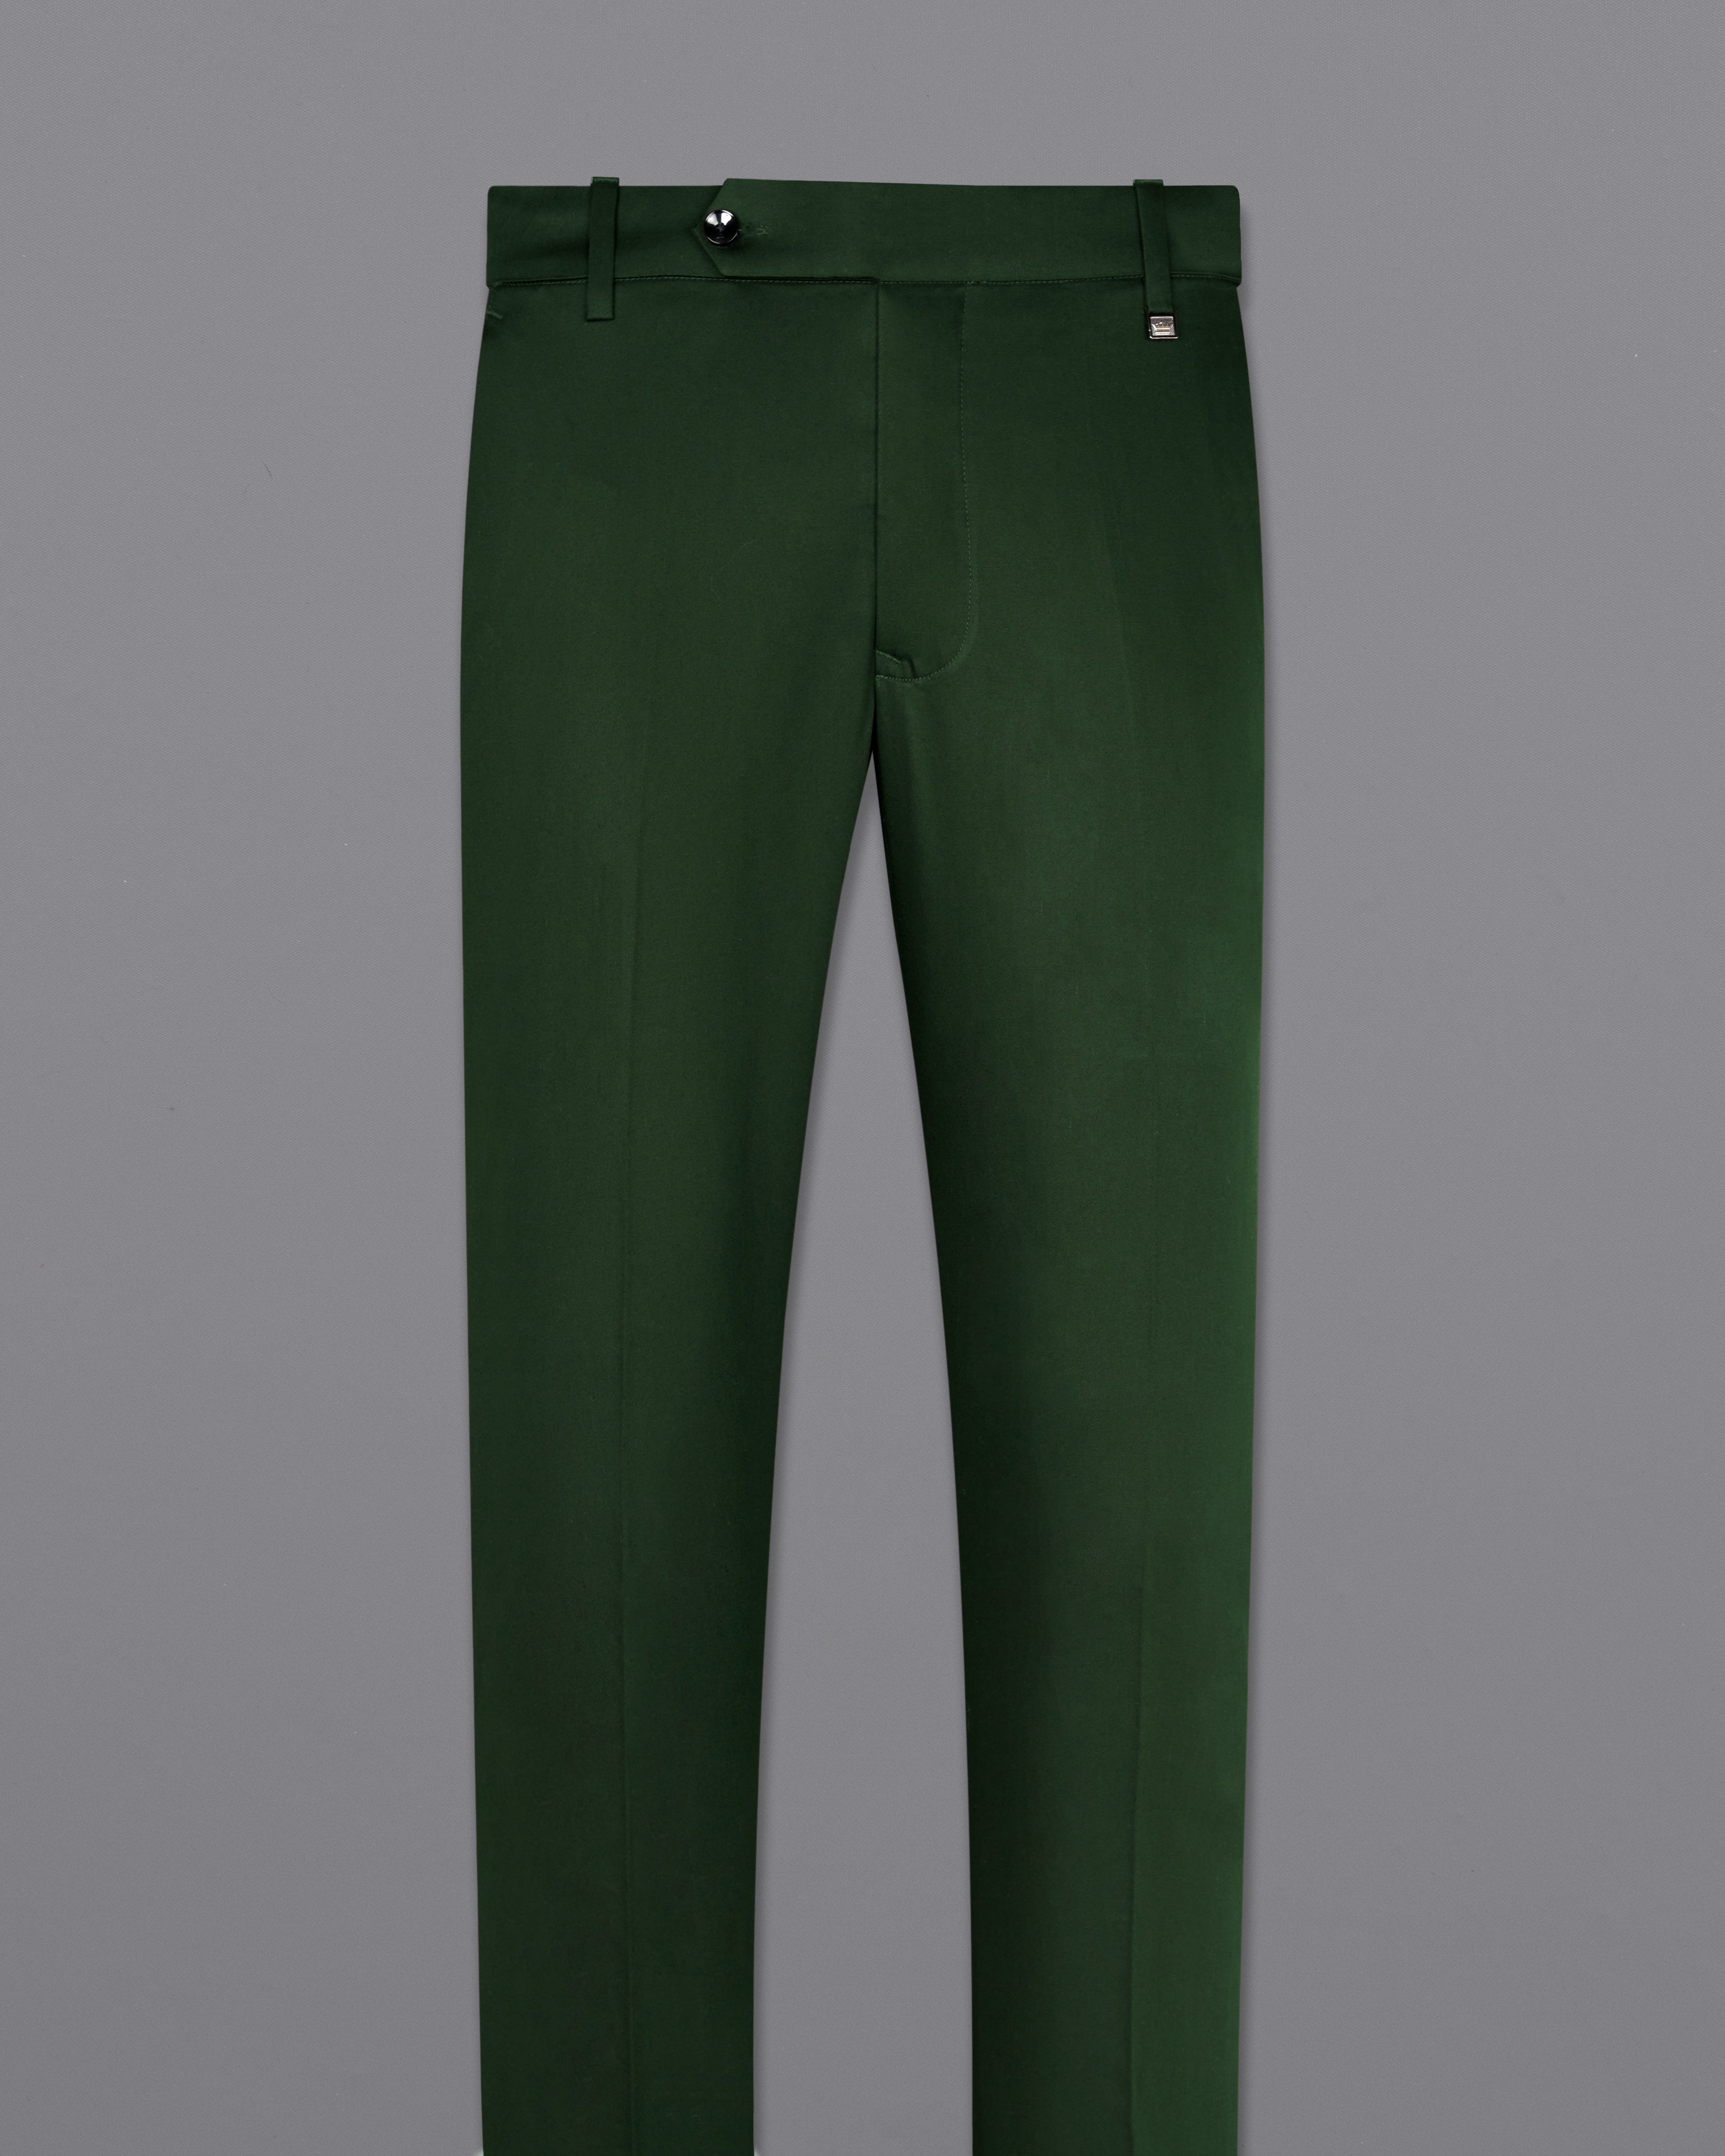 Myrtle Green Wool Rich Stretchable traveler Pant T2704-28, T2704-30, T2704-32, T2704-34, T2704-36, T2704-38, T2704-40, T2704-42, T2704-44